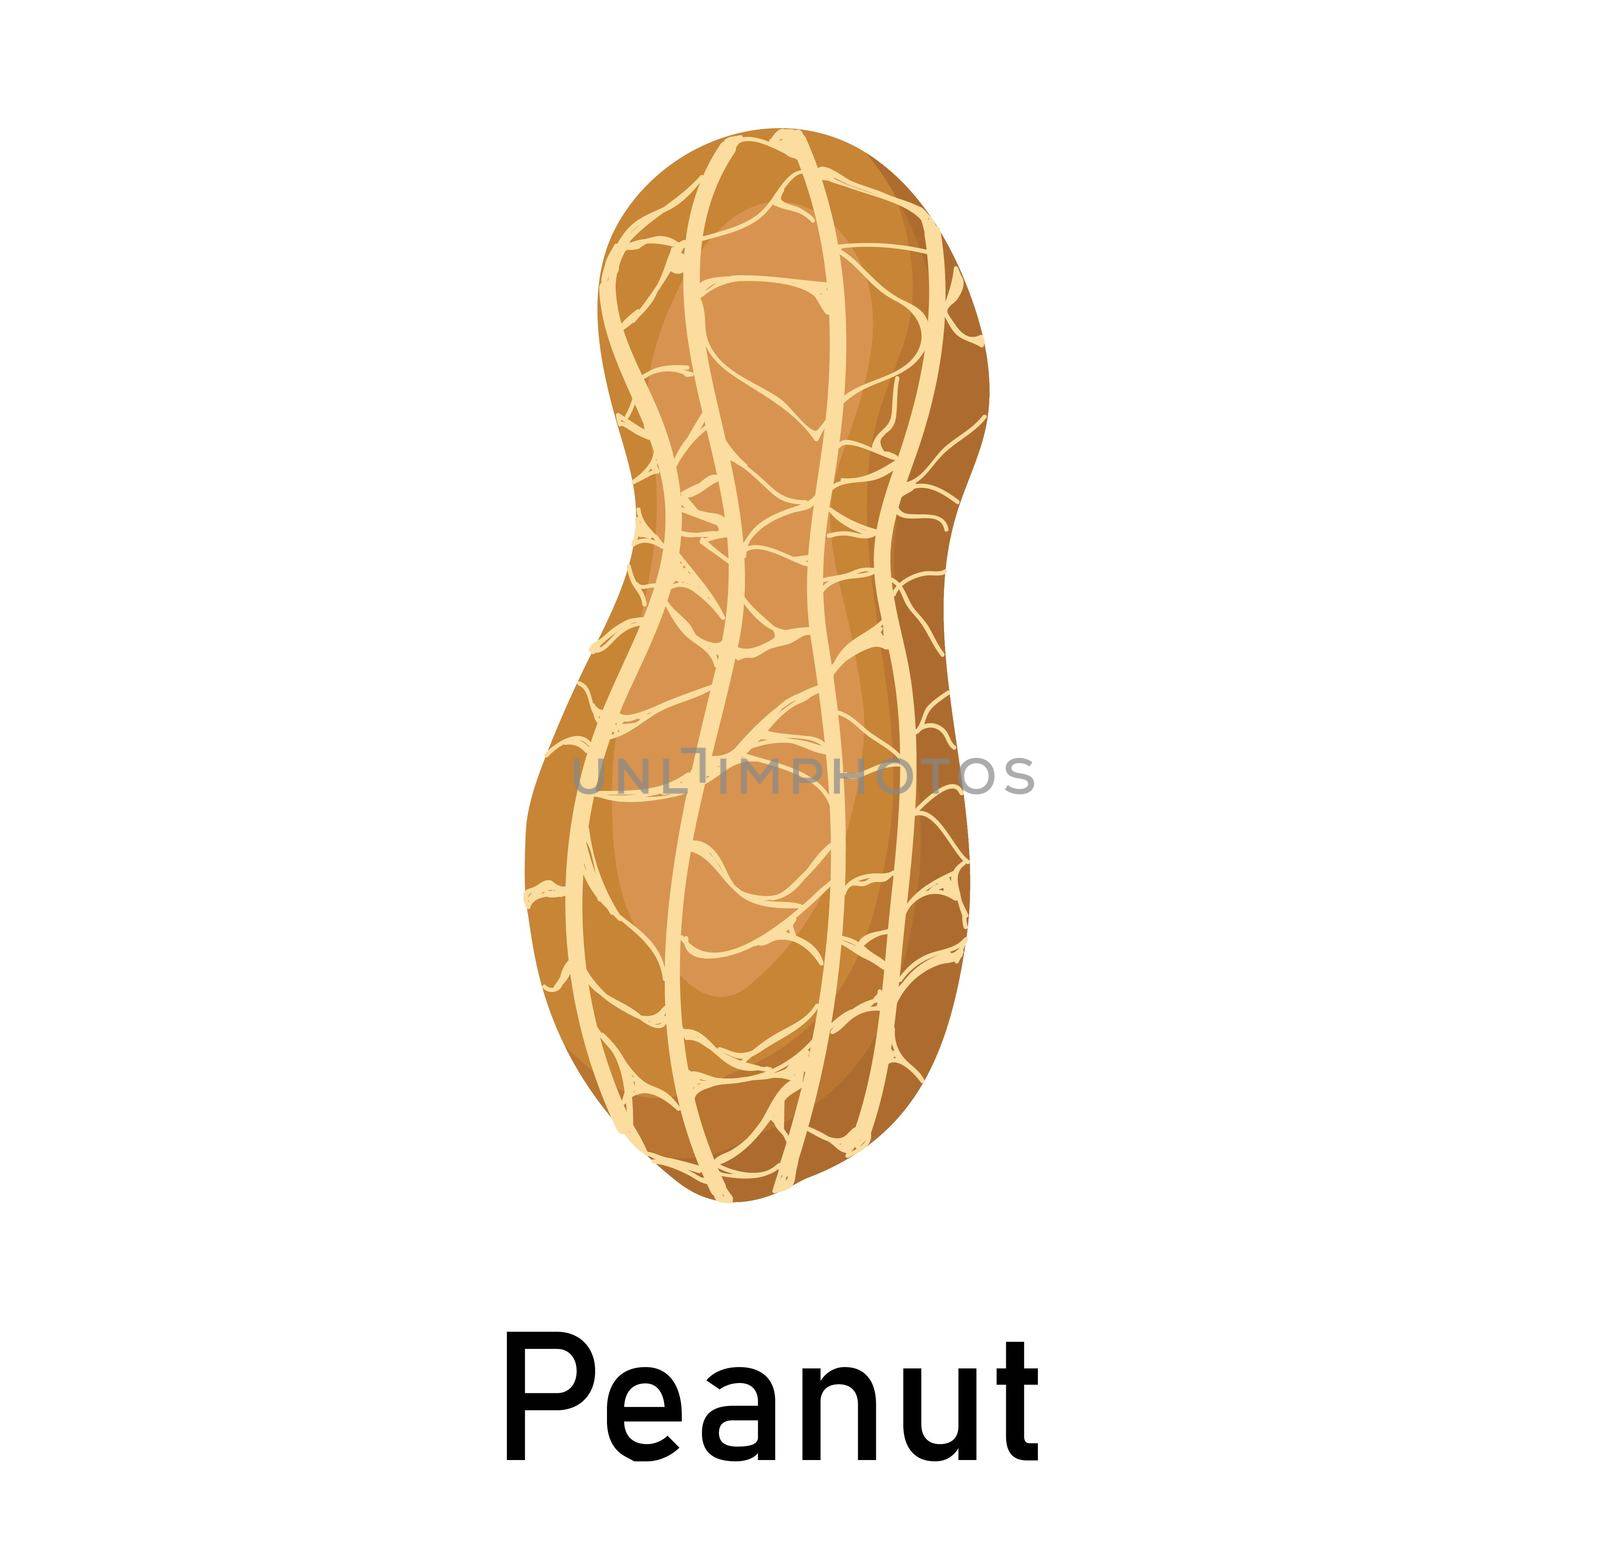 Peanuts. illustration isolated on white background. Useful vegan food. Nuts are good